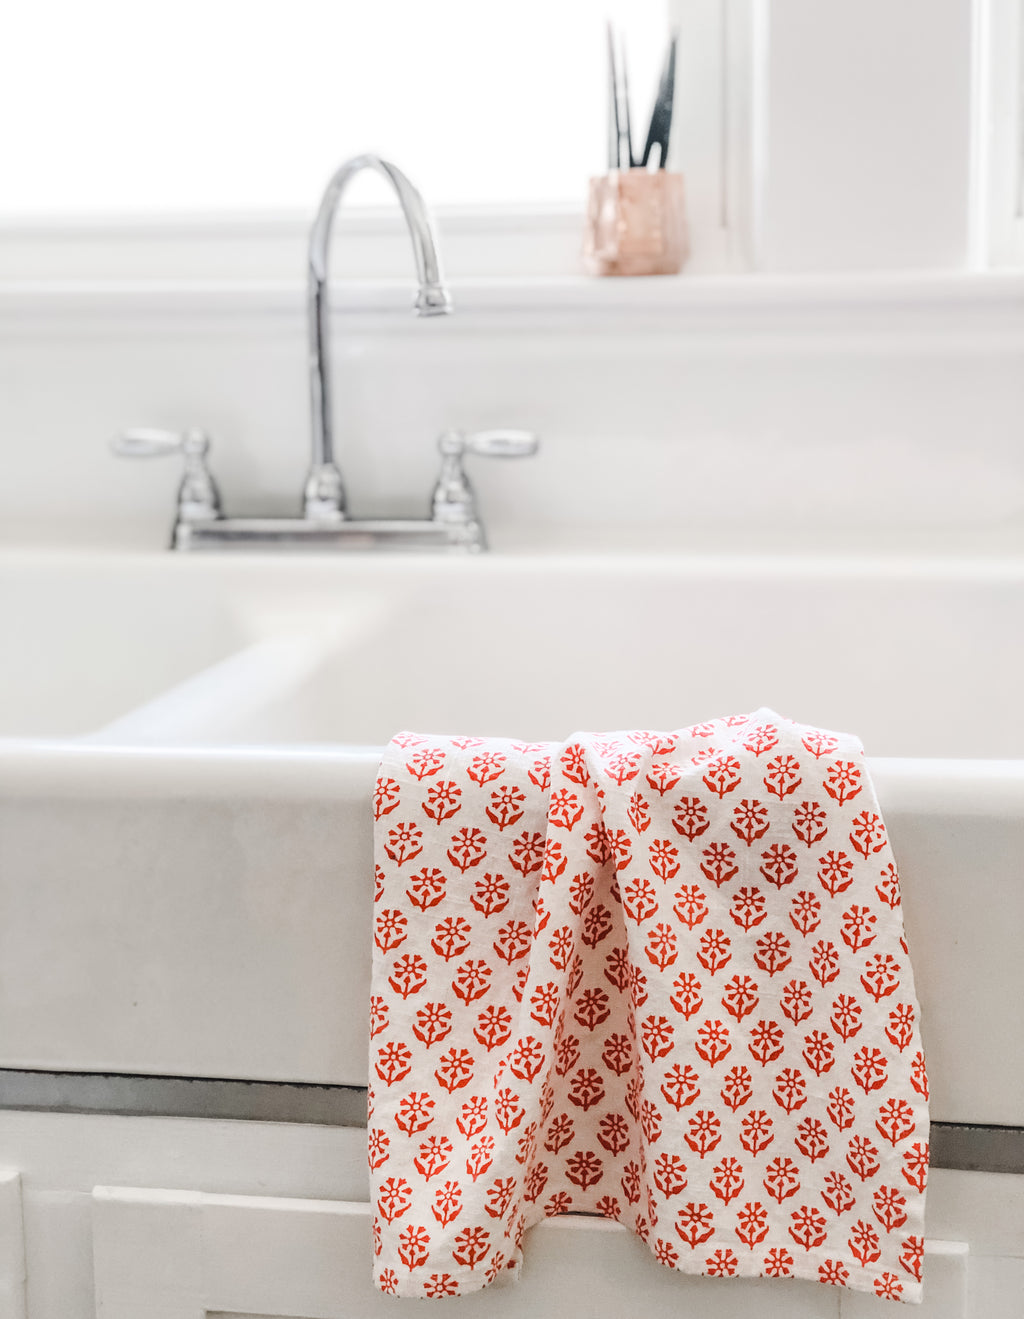 Handprinted Kitchen Towel- Winter Squash Block Print – Mom's Sweet